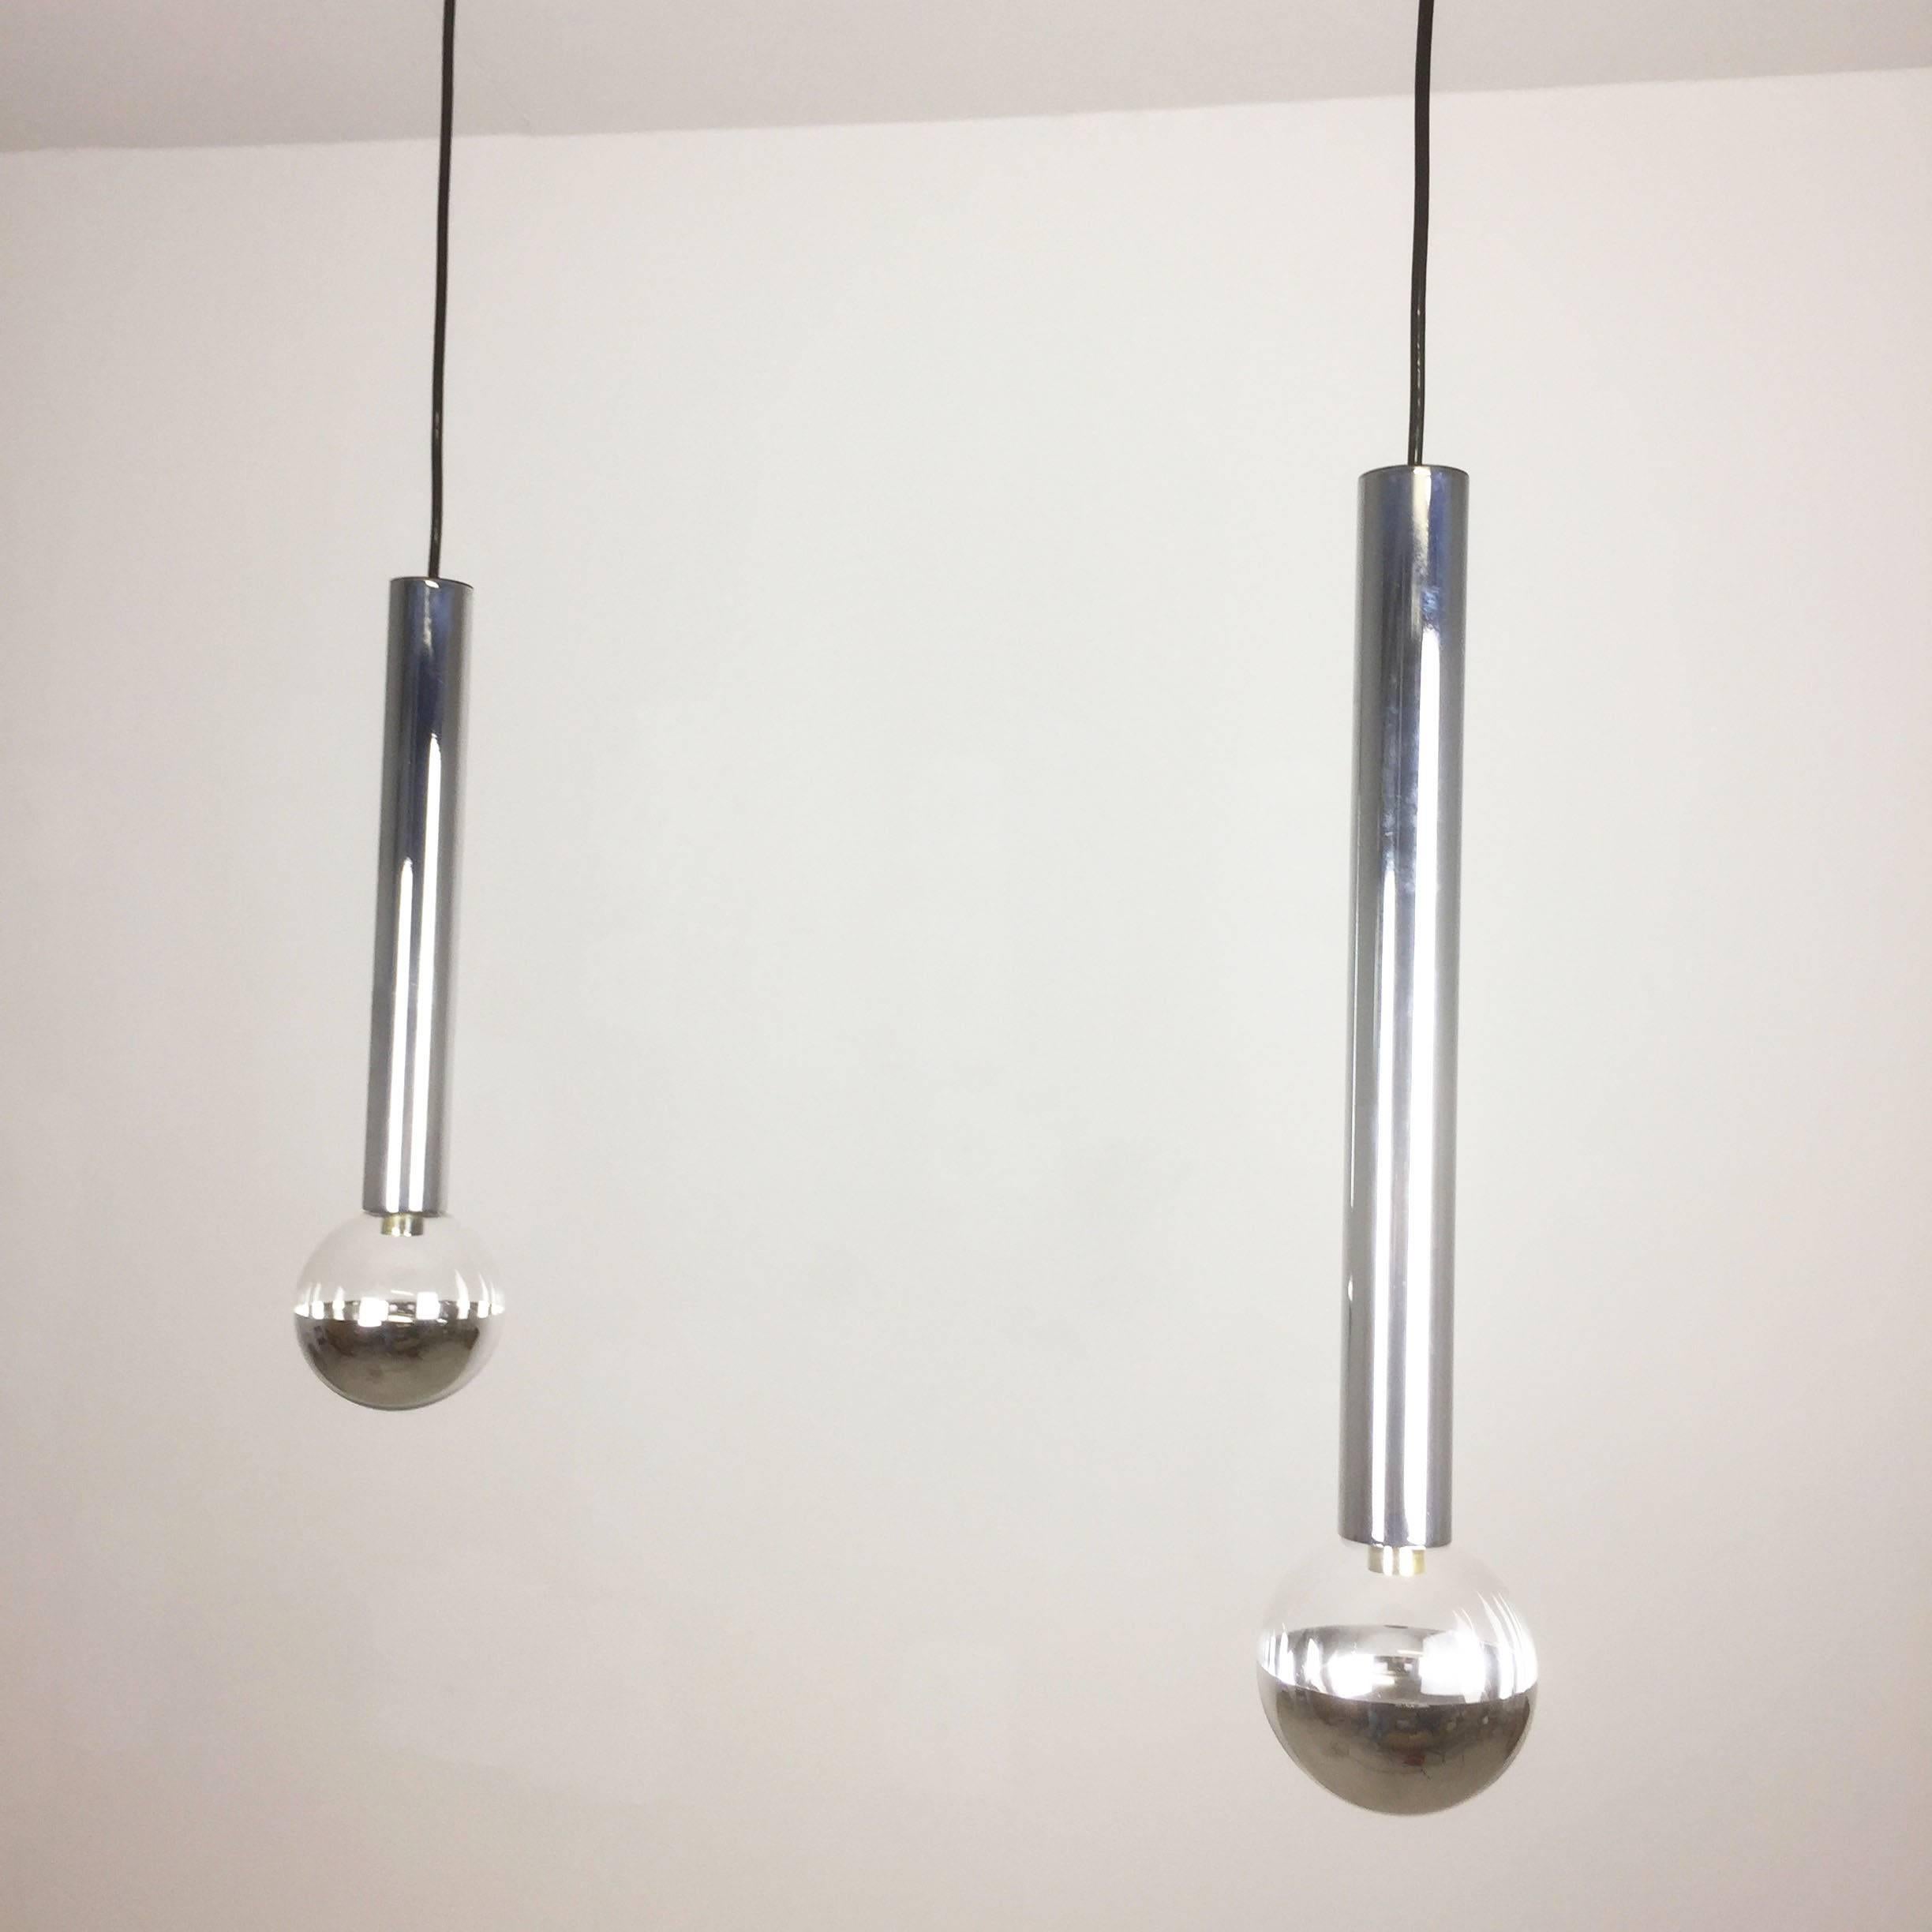 1970s Chrome hanging Lights Glass Bulb by Motoko Ishi for Staff Lights, Germany For Sale 3